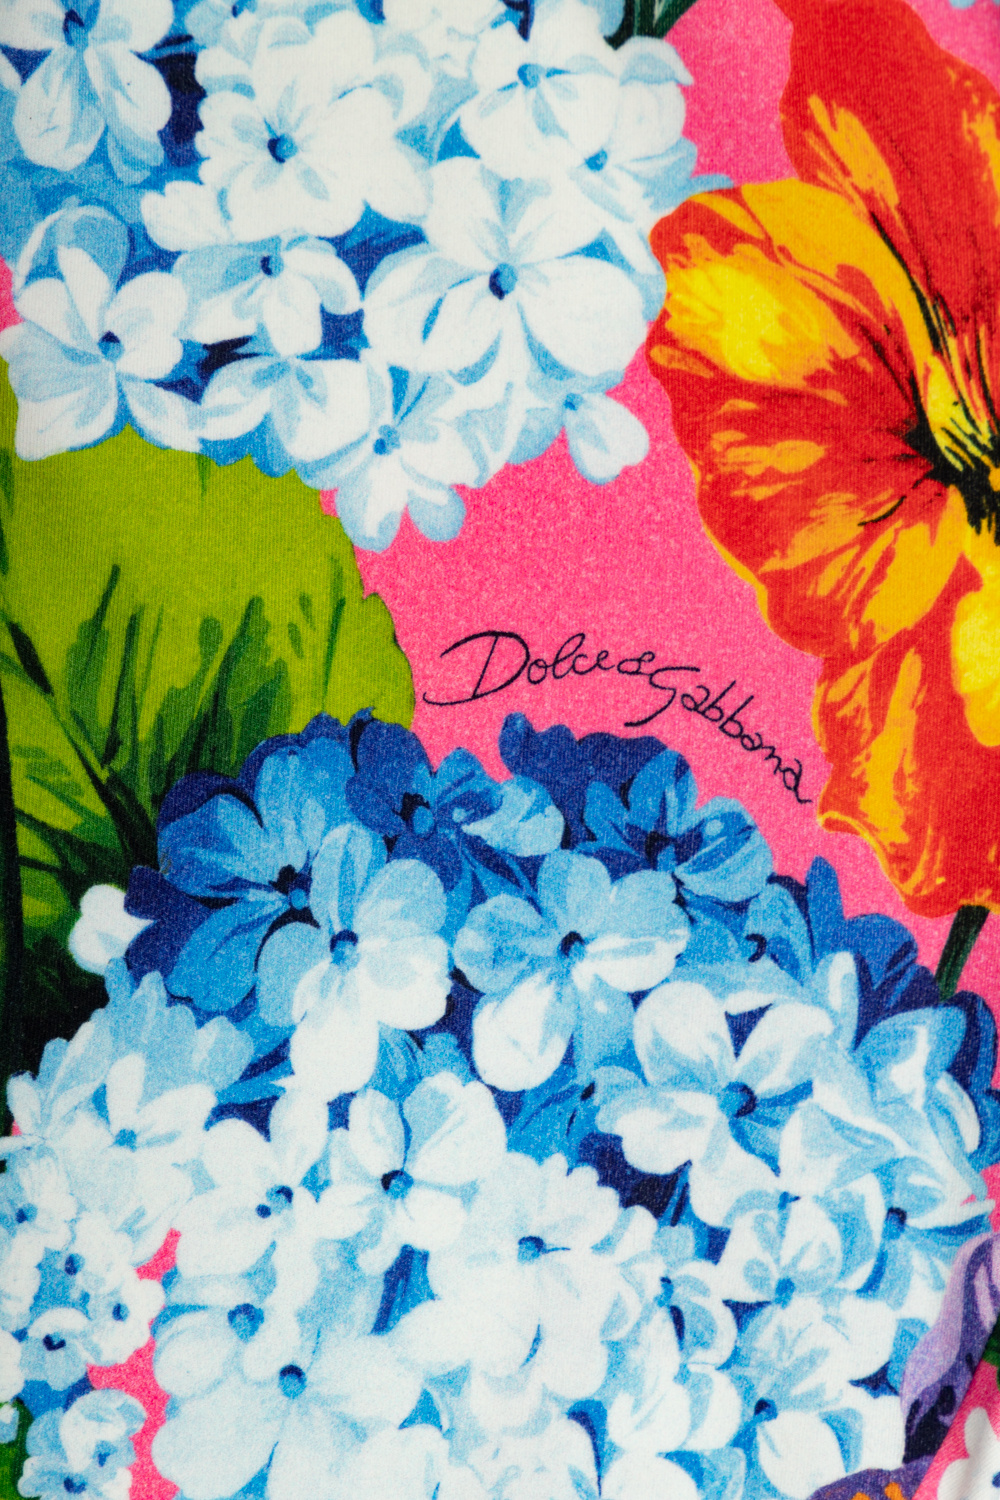 Dolce & Gabbana graffiti Cardholder Leggings with floral motif